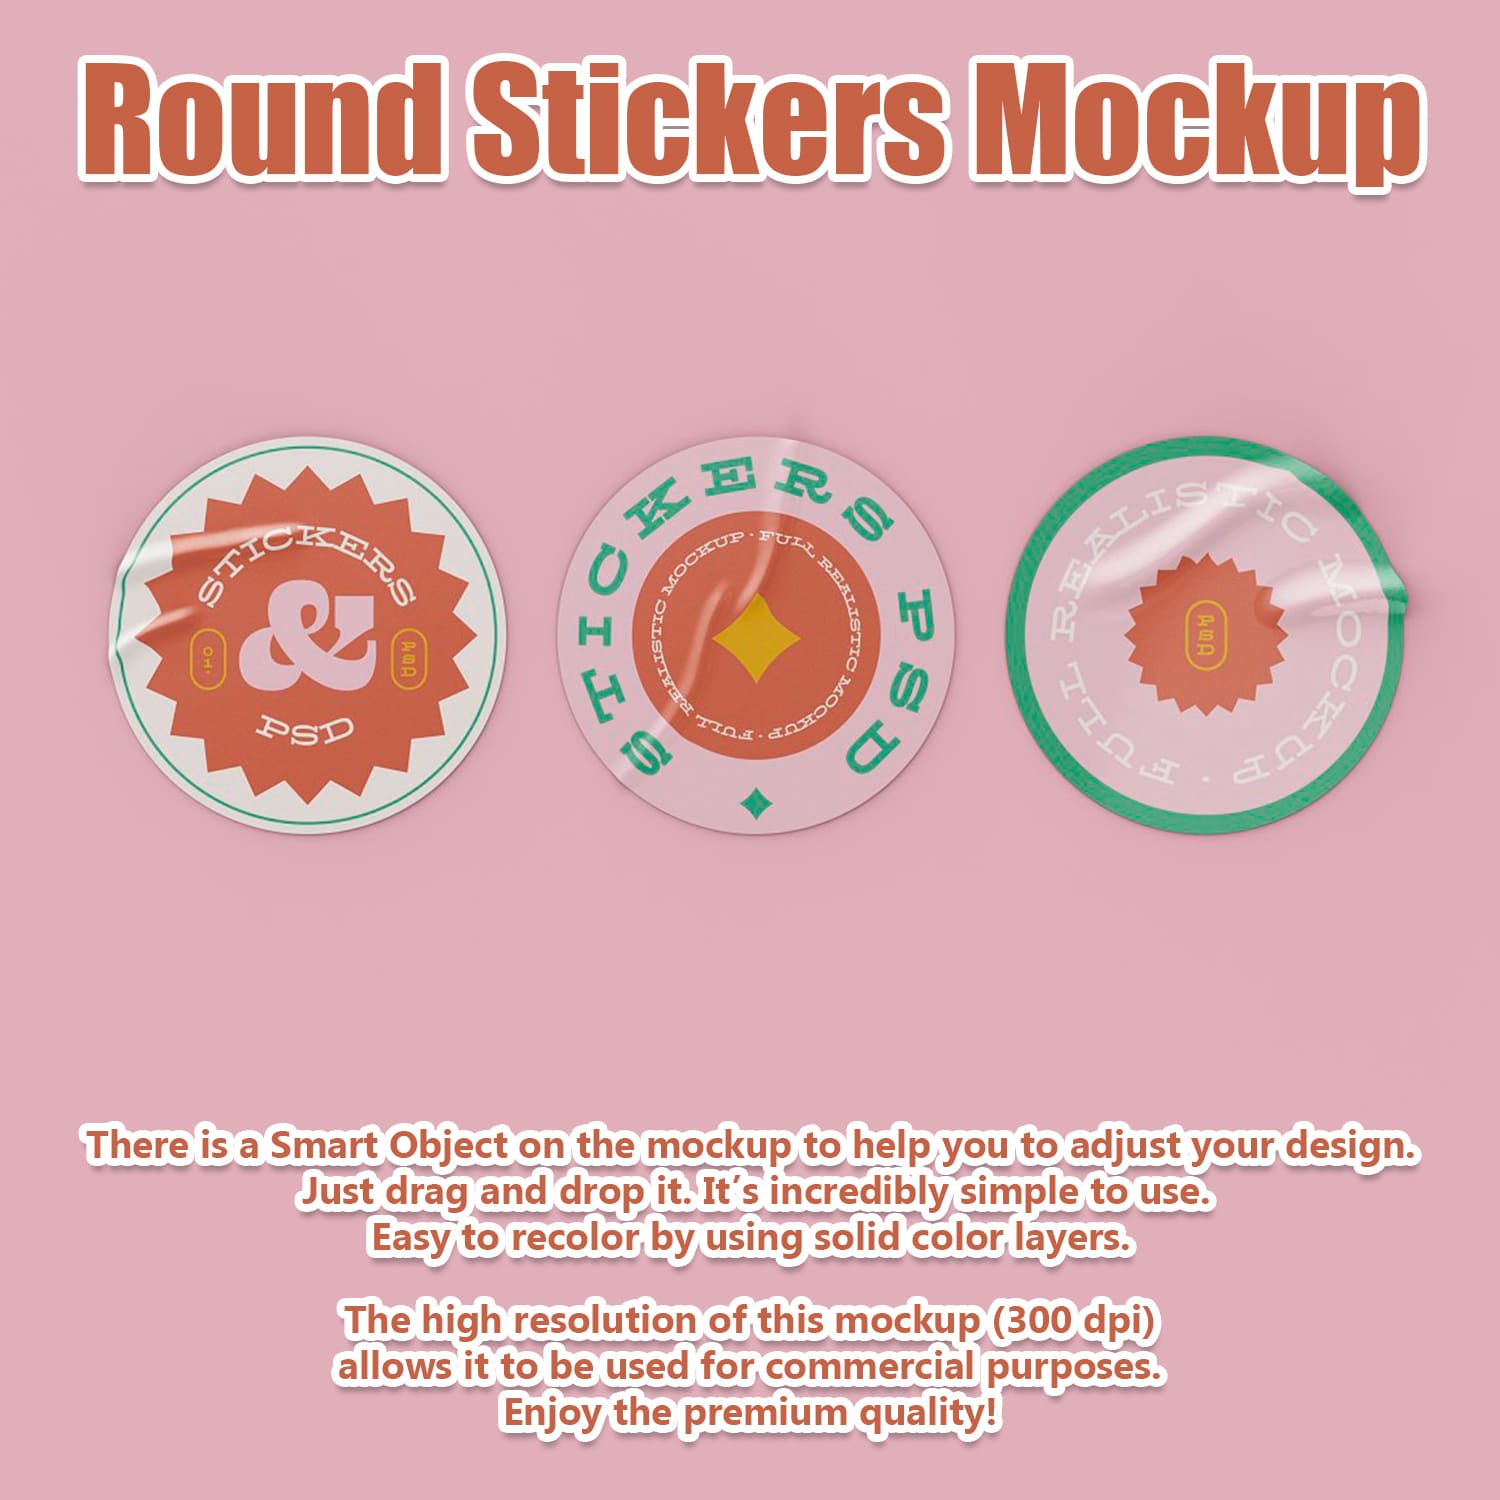 Set of adorable round sticker mockups.